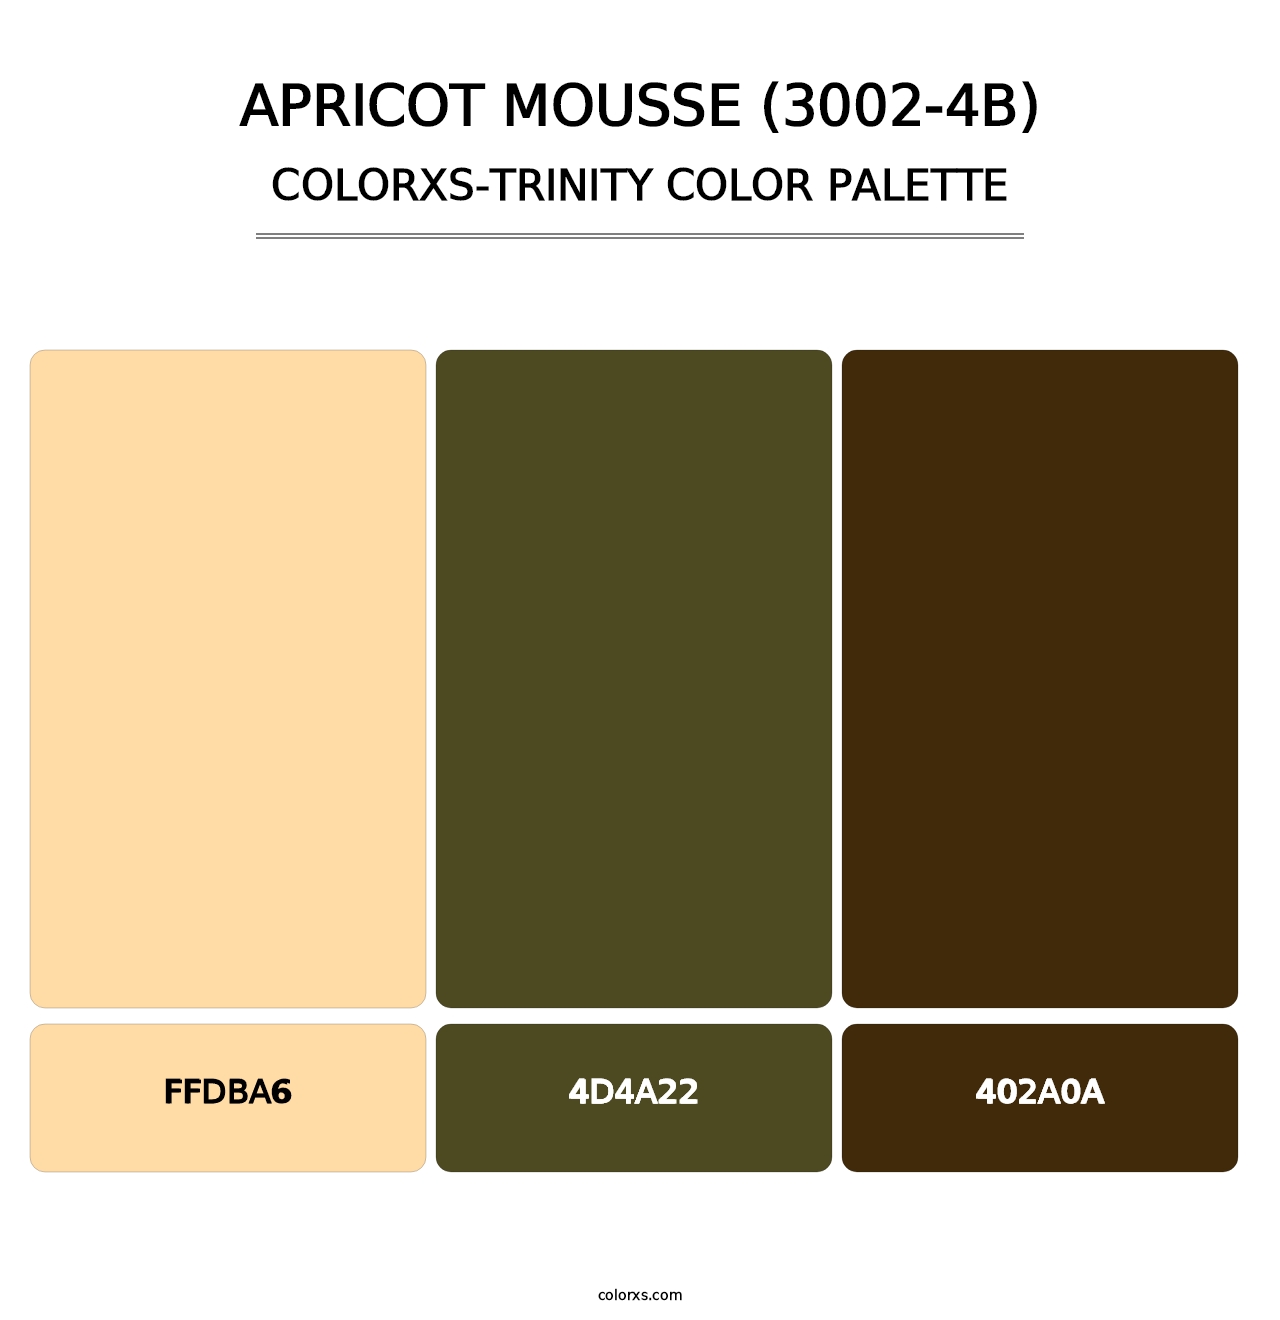 Apricot Mousse (3002-4B) - Colorxs Trinity Palette